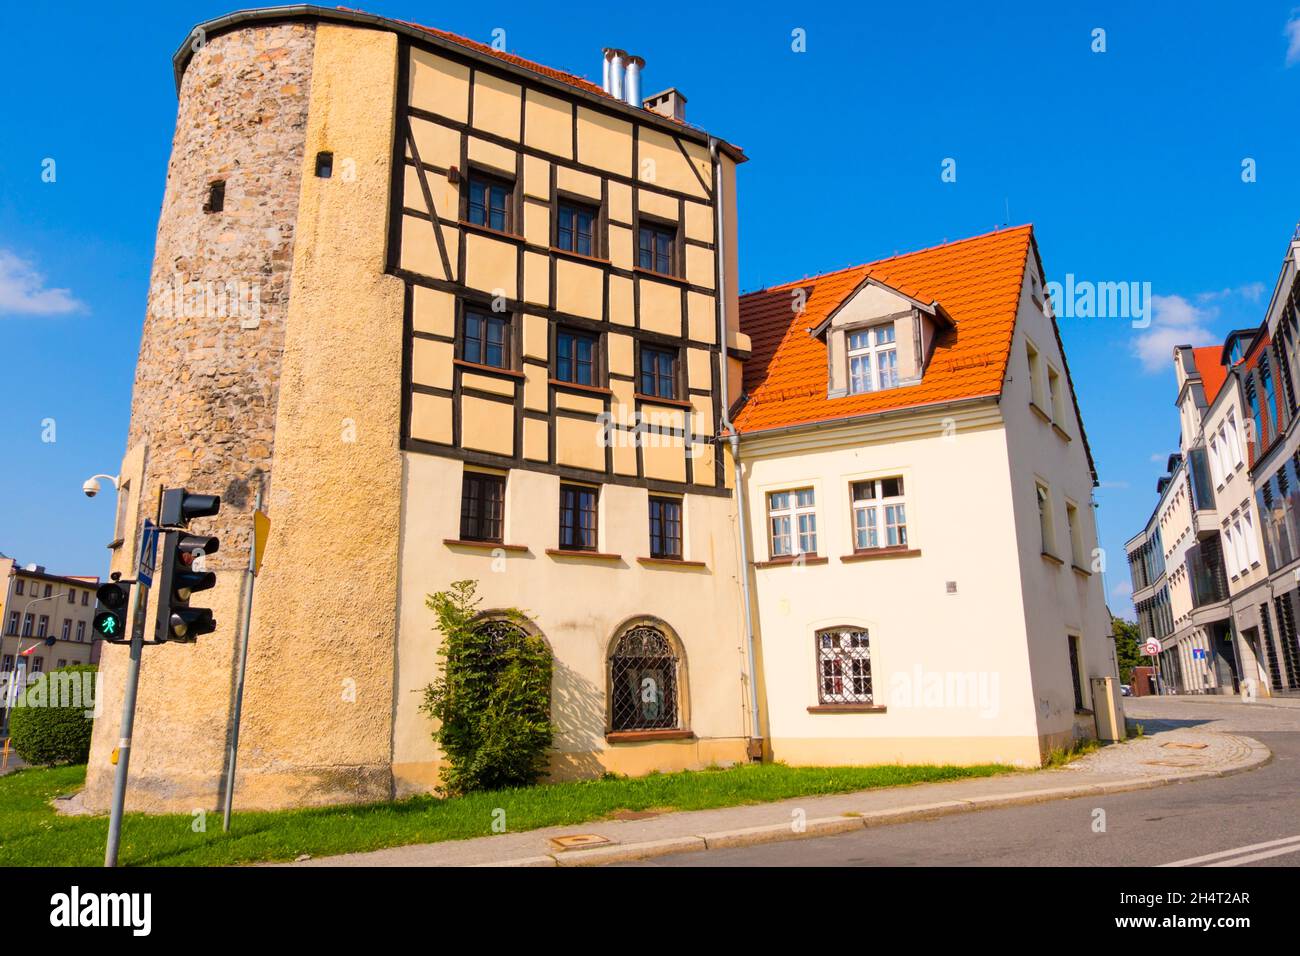 Baszta Grodzka, City Gate Bastion, with houses attached to it, Jelenia Gora, Poland Stock Photo